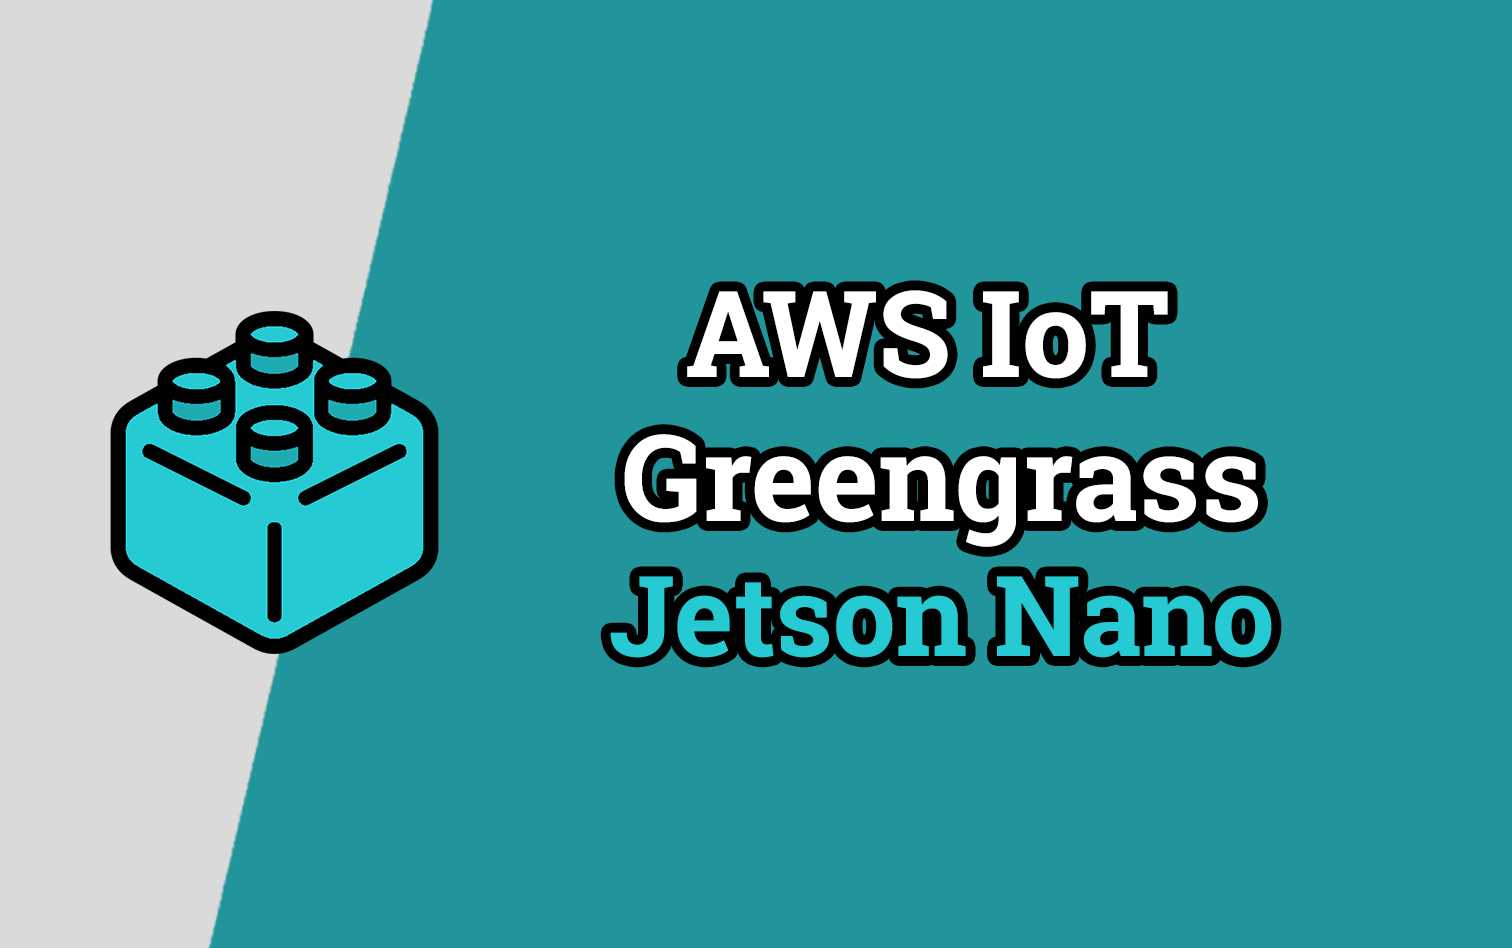 AWS IoT Greengrass - Jetson Nano